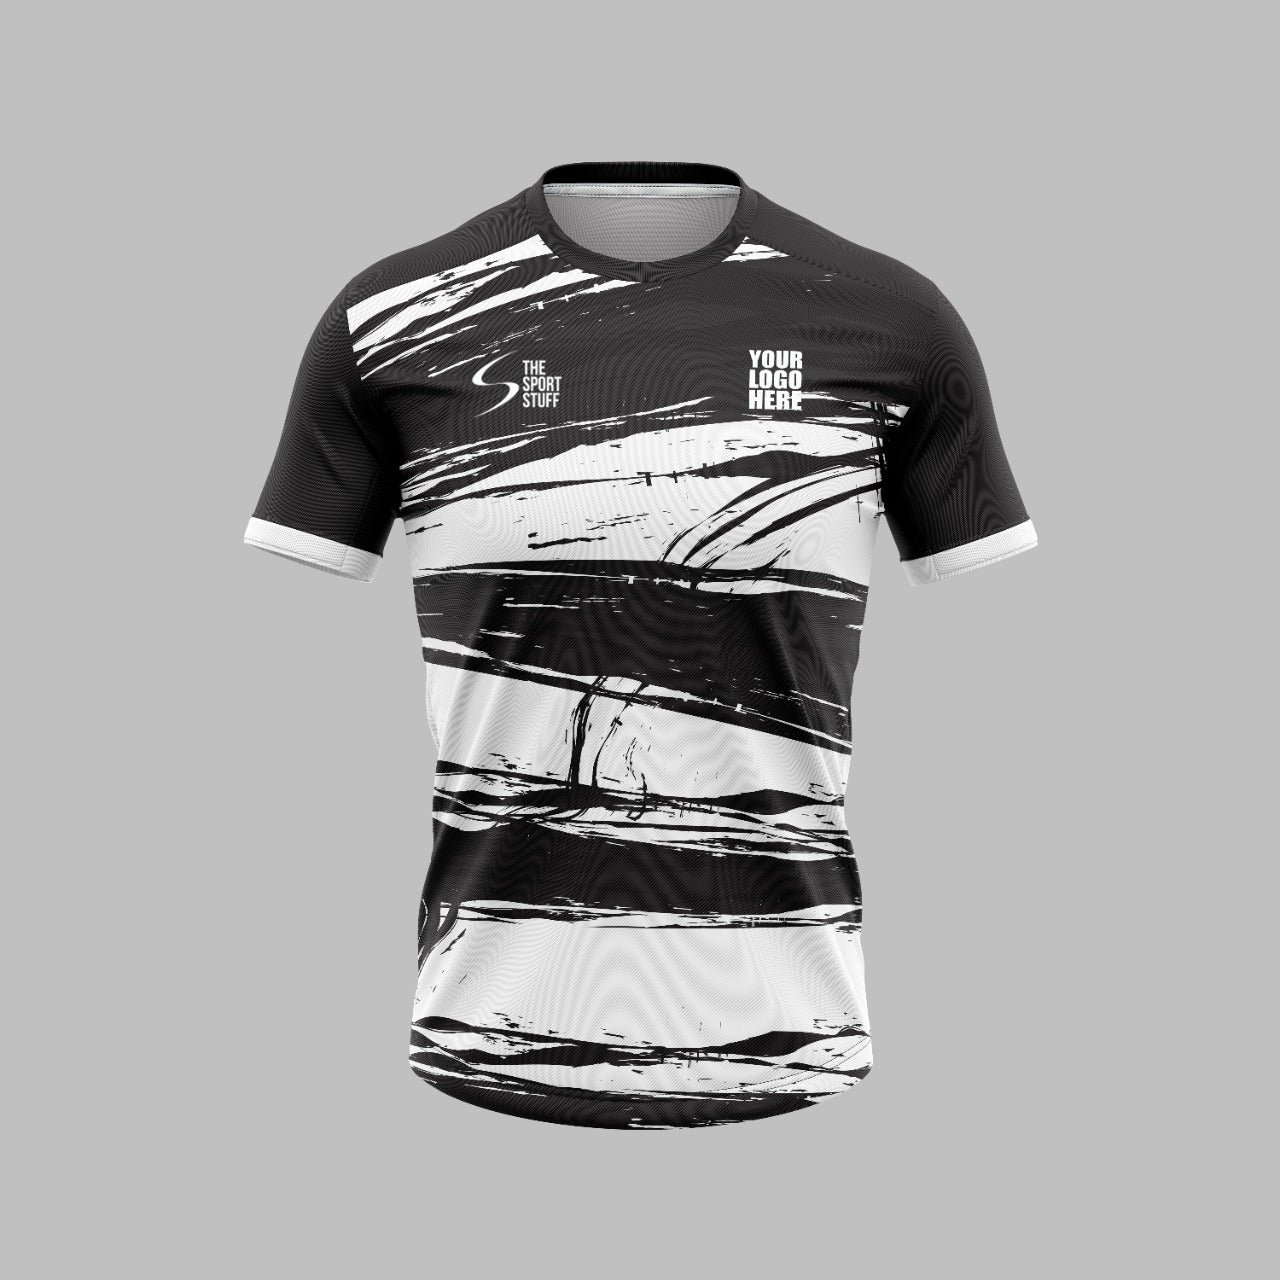 Black White Customized Football Team Jersey Design | Customized ...